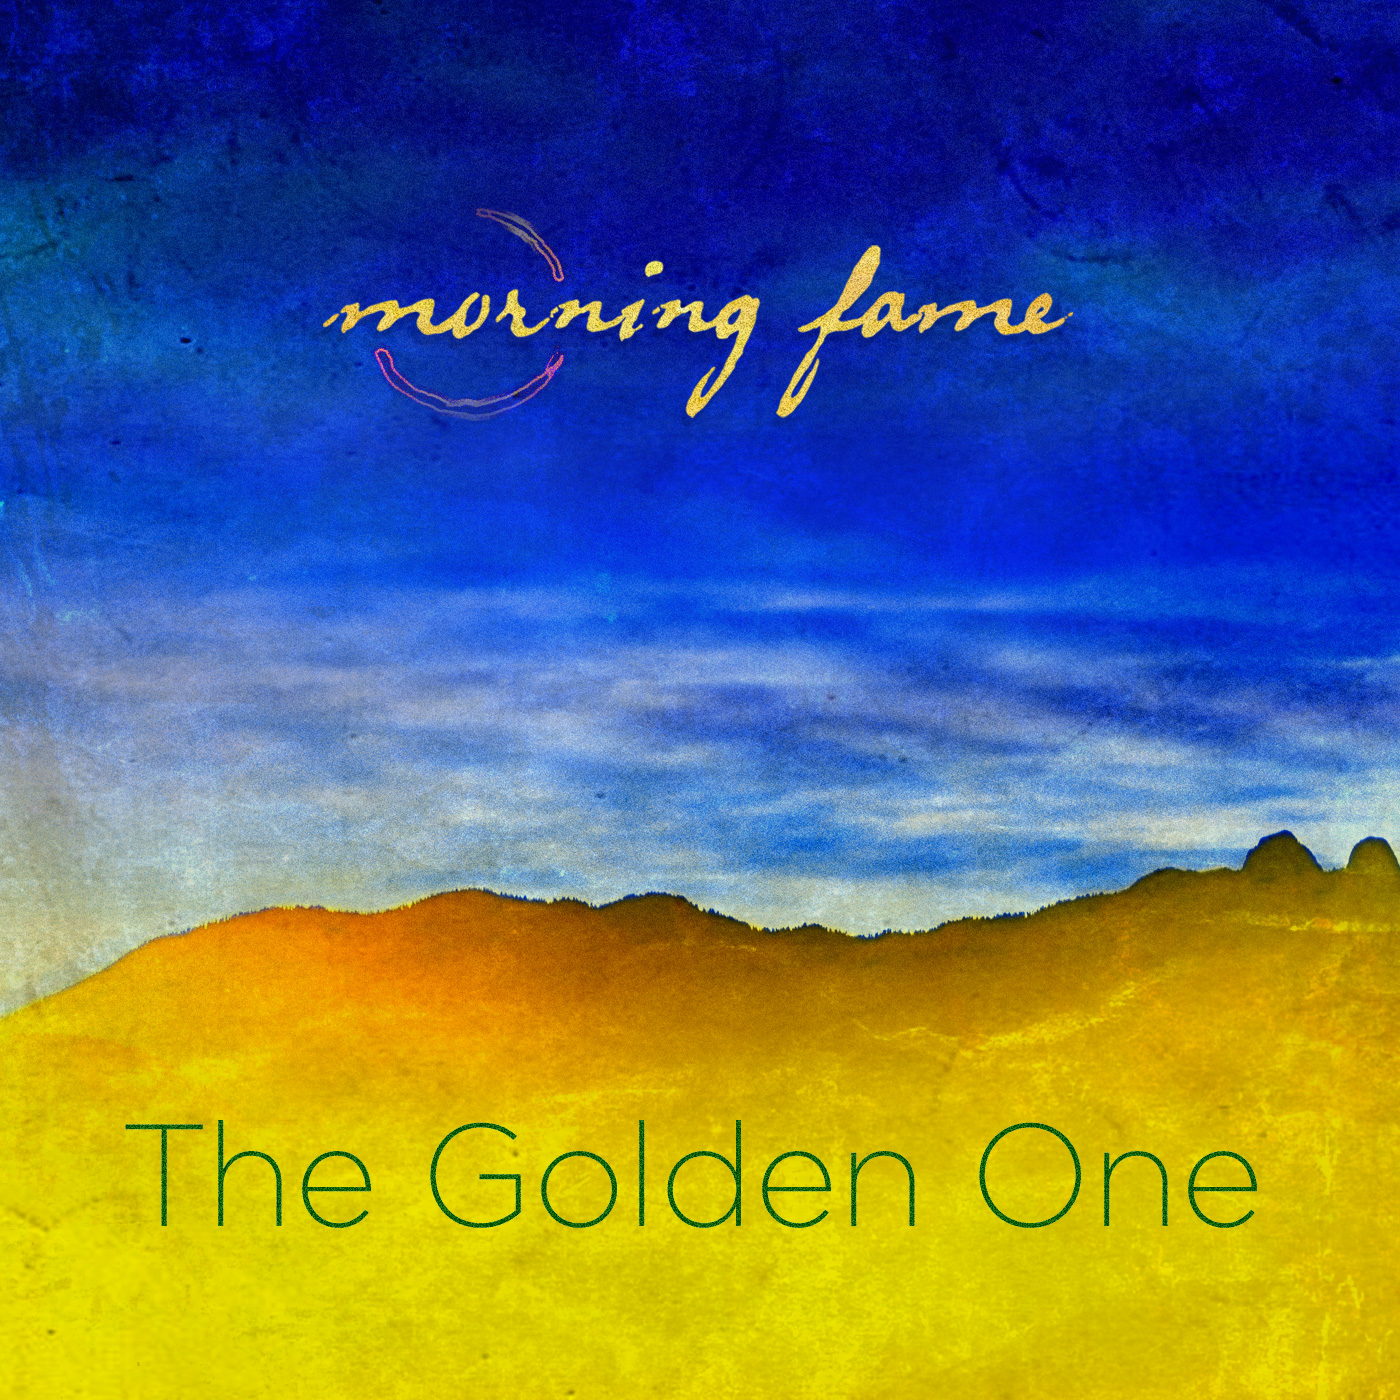  Morning Fame – “The Golden One”